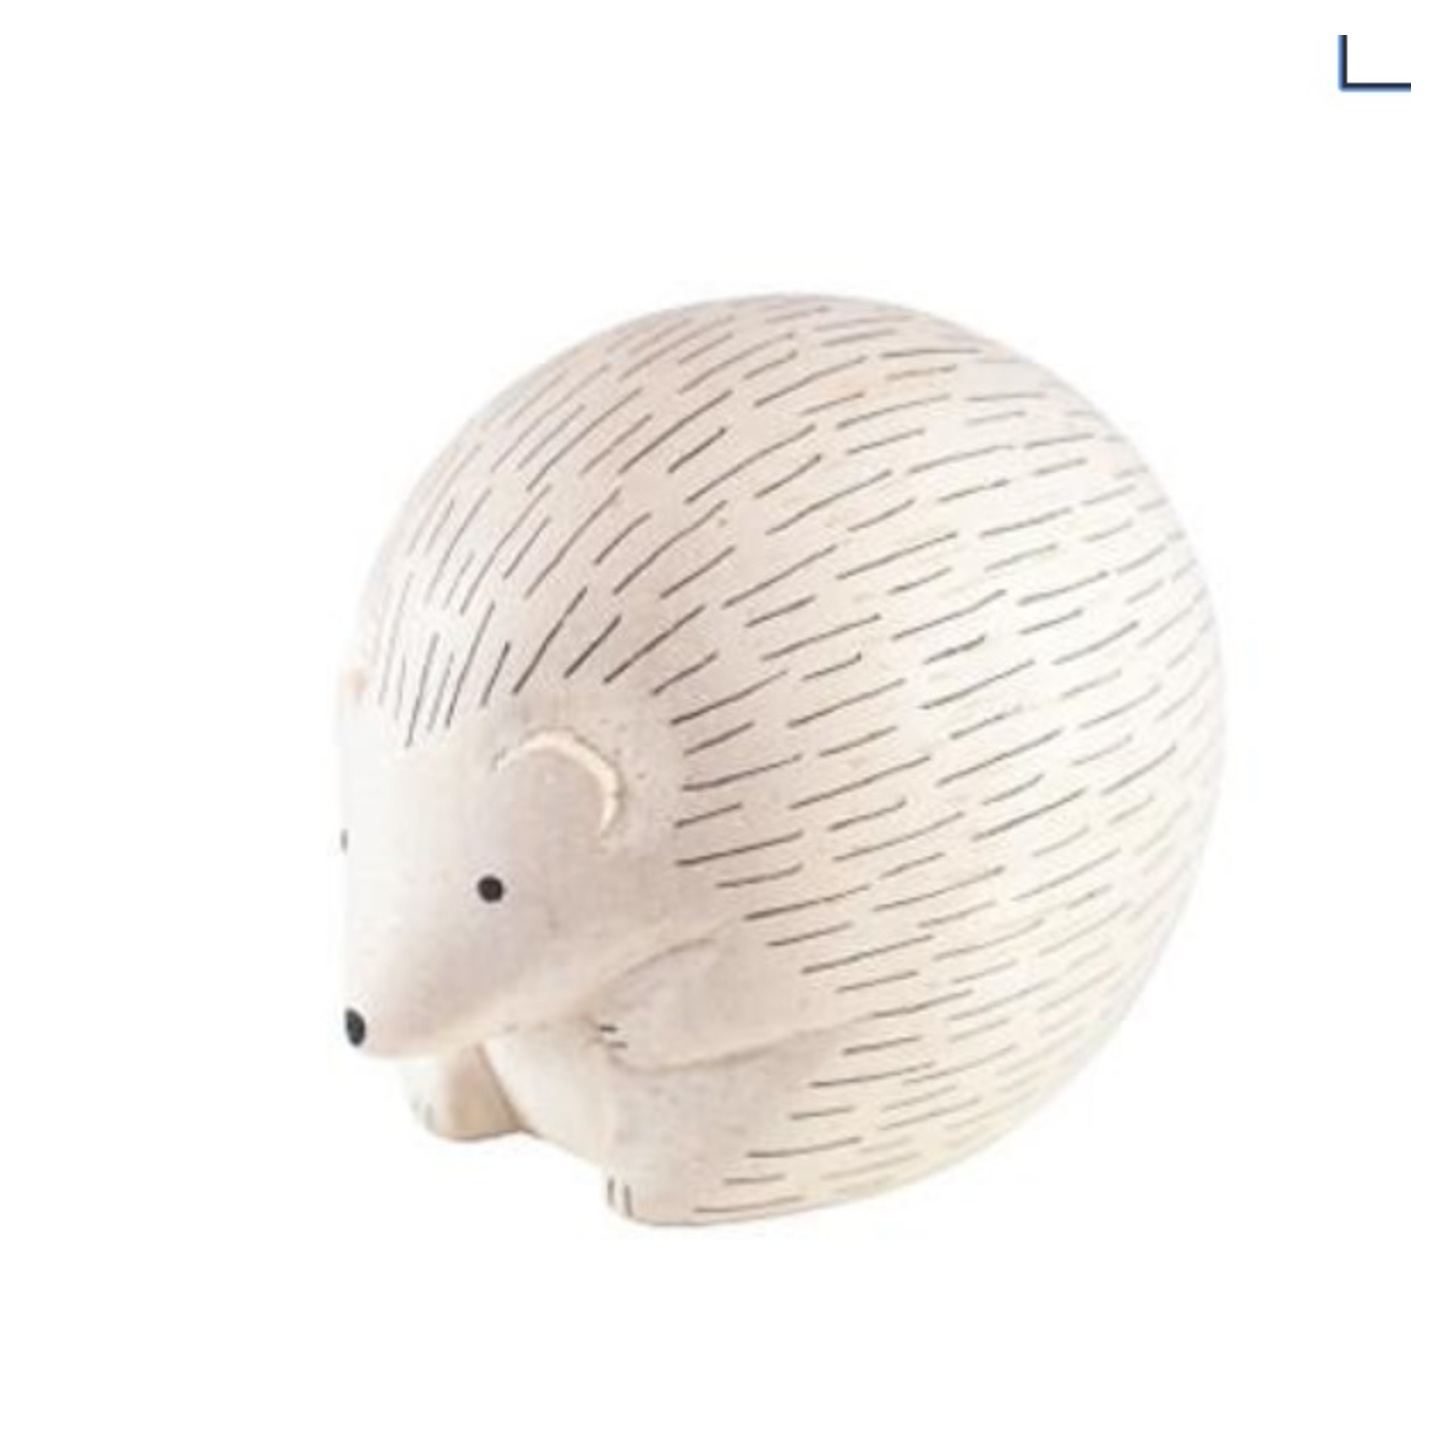 Polepole Hedgehog